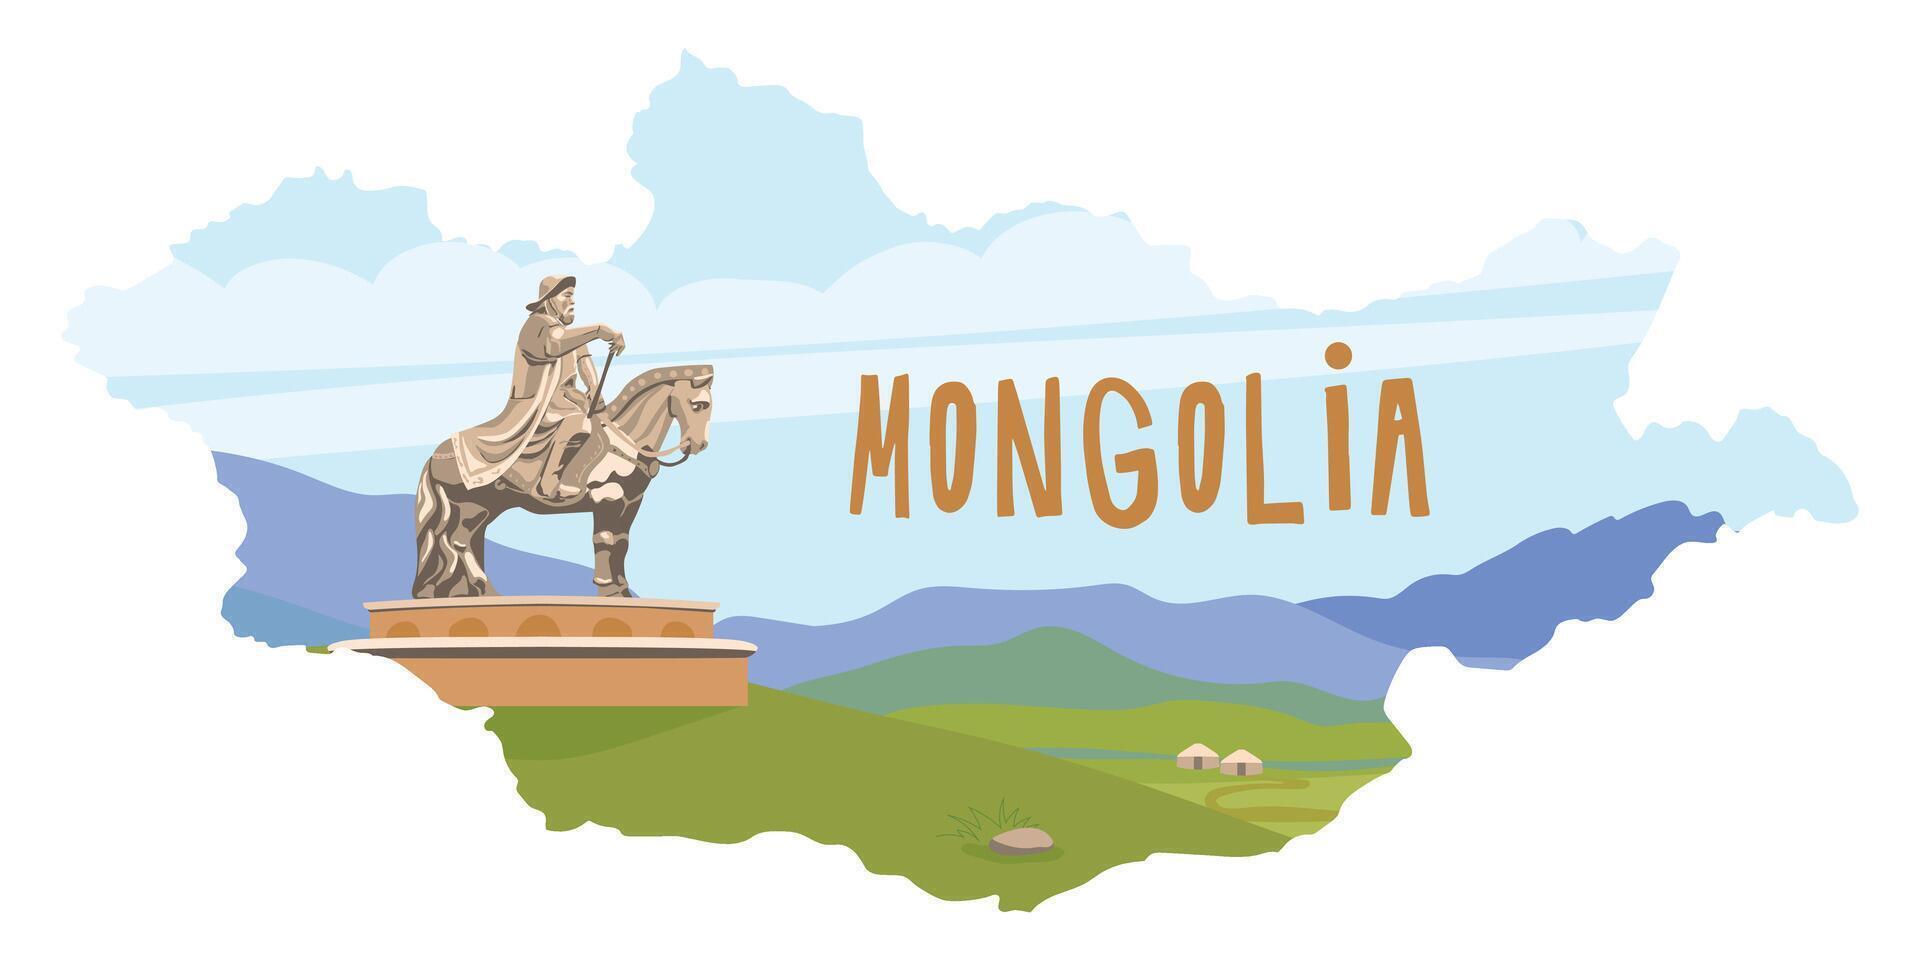 Monumento a genghis kan en el mongol estepa cerca ulaanbaatar. jinete escultura, . fundador de el mongol imperio, líder de el nómadas mapa de Mongolia. vector